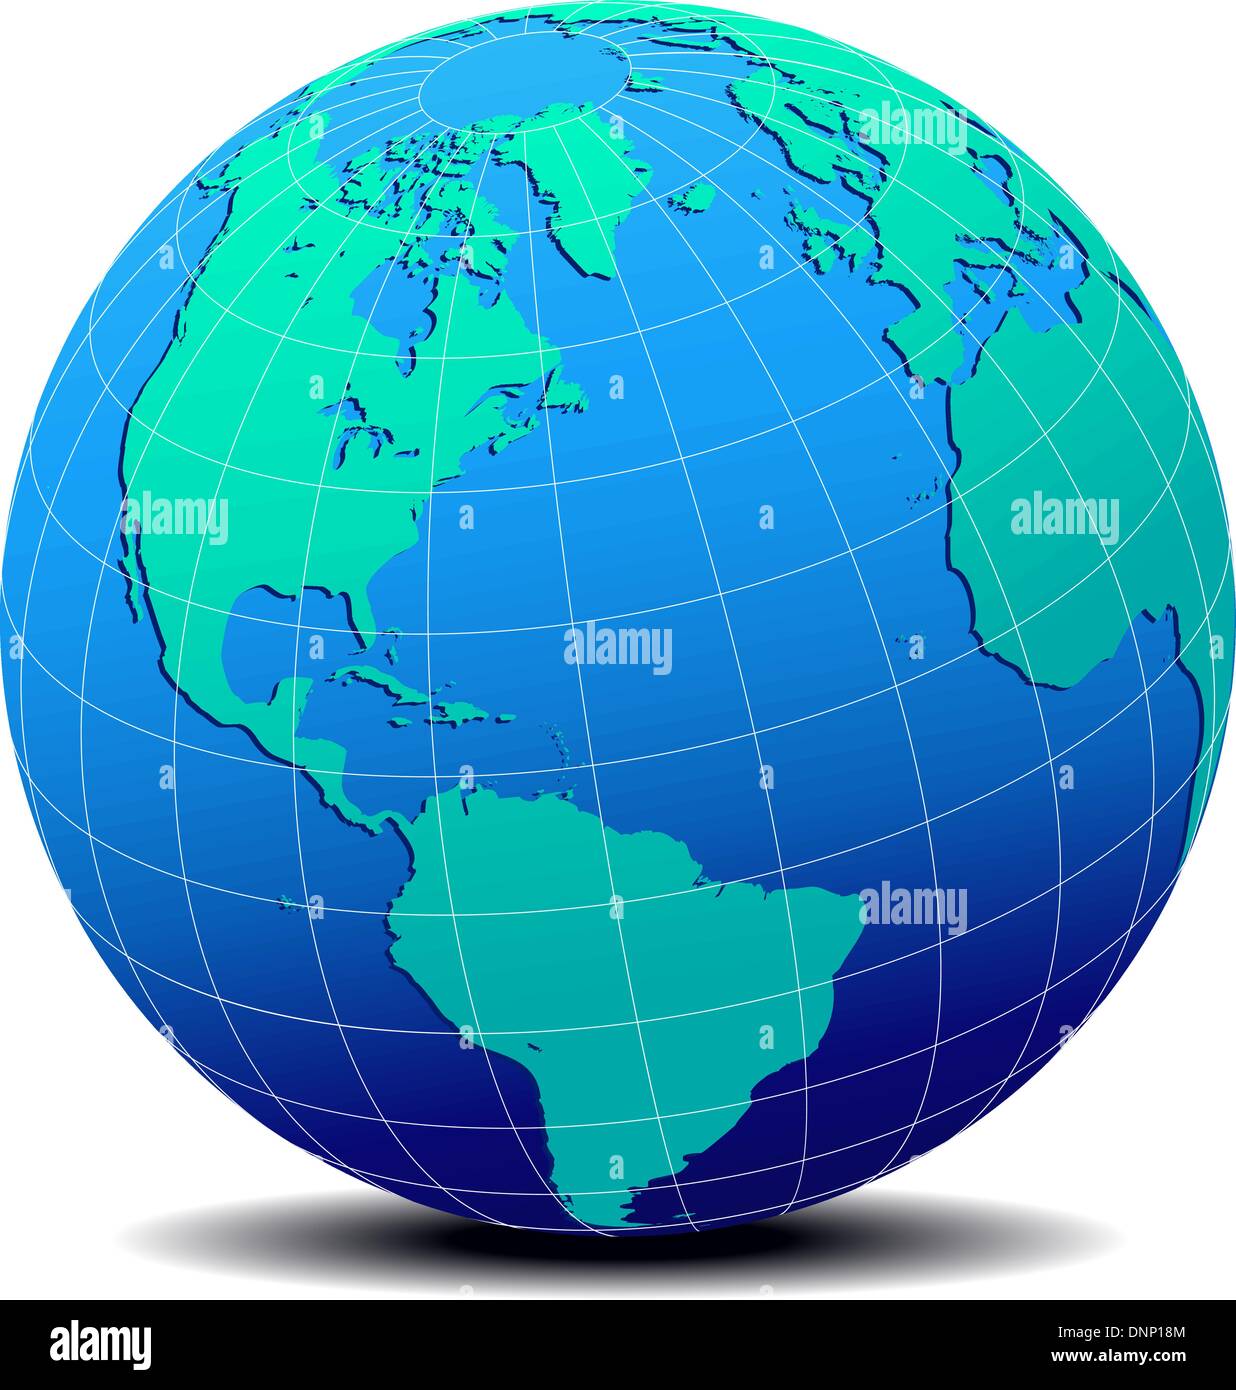 Vektor-Kartensymbol der Welt in Globe-Form - Amerika Stock Vektor